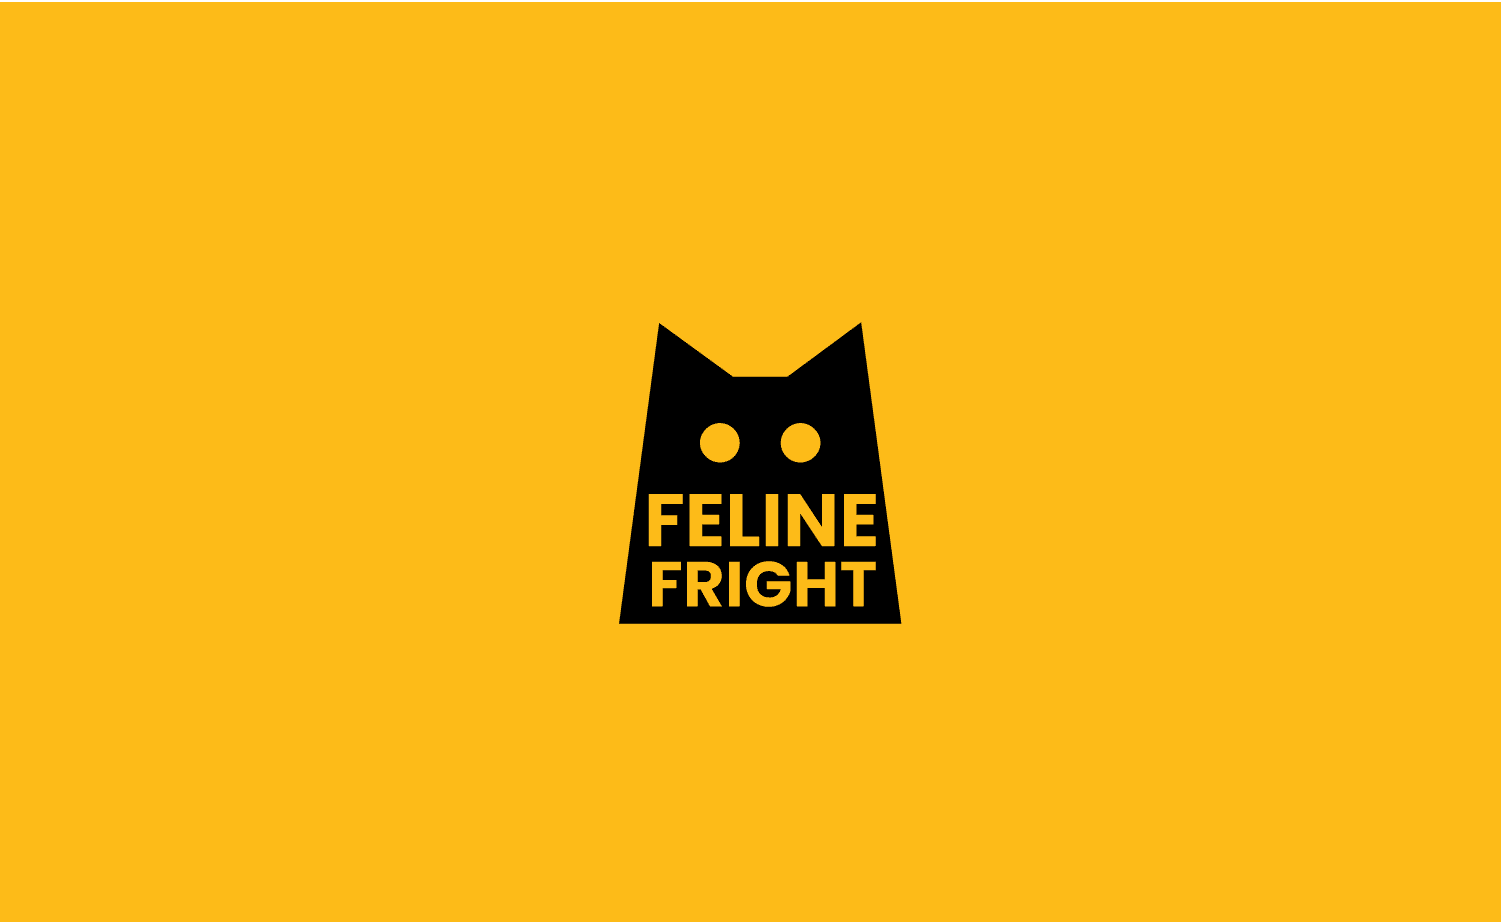 Feline Fright black logo against a yellow background.